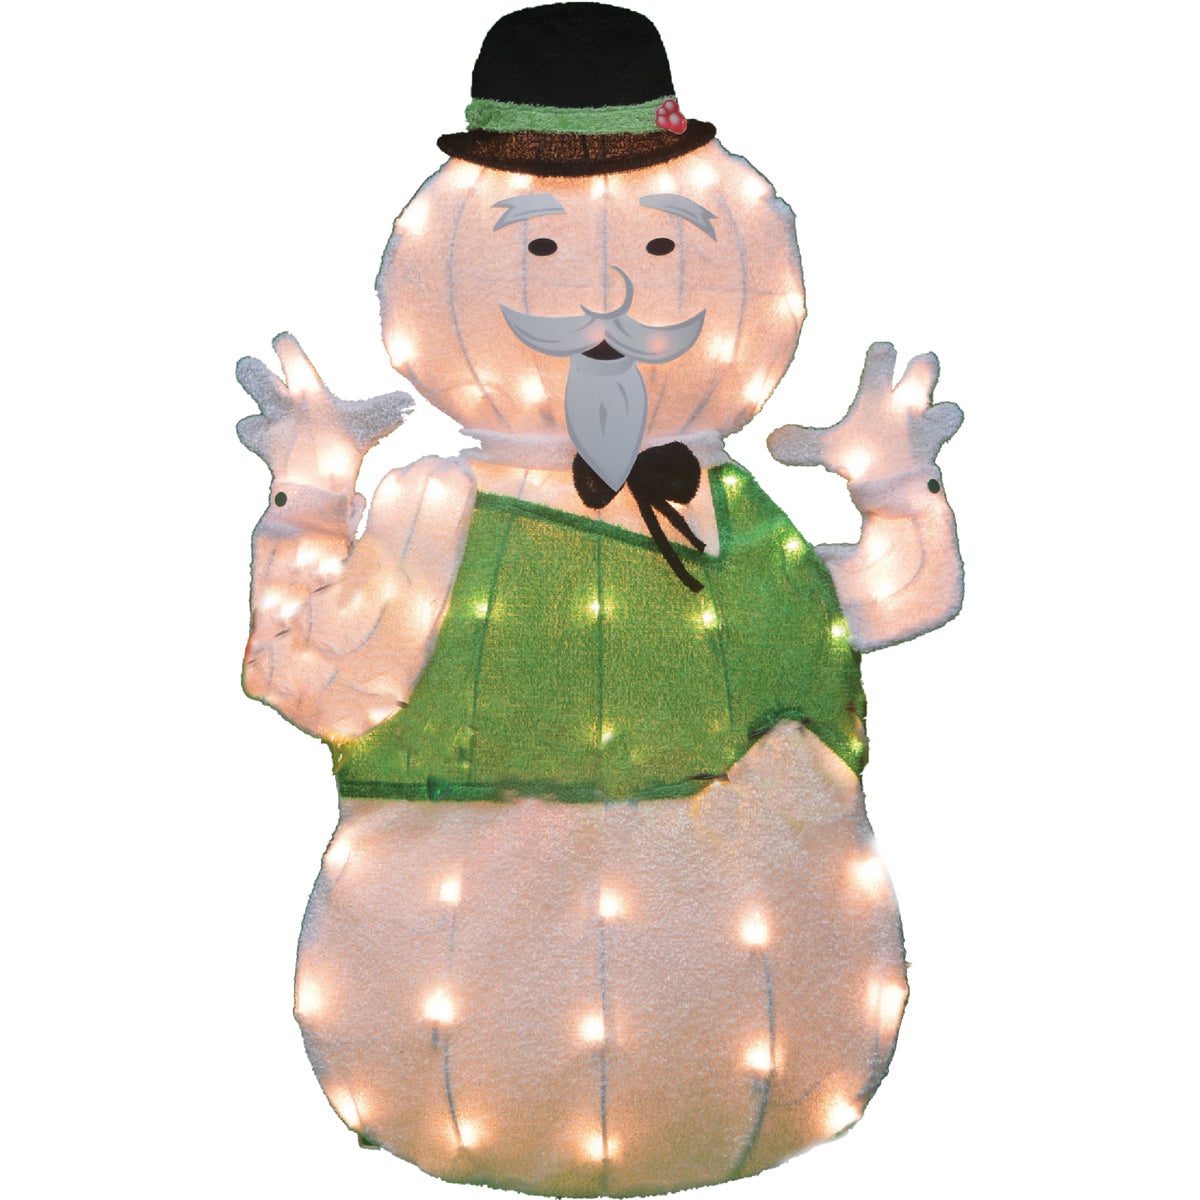 Item 900214, 32-inch 2-dimensional pre-lit Rudolph's Sam The Snowman.